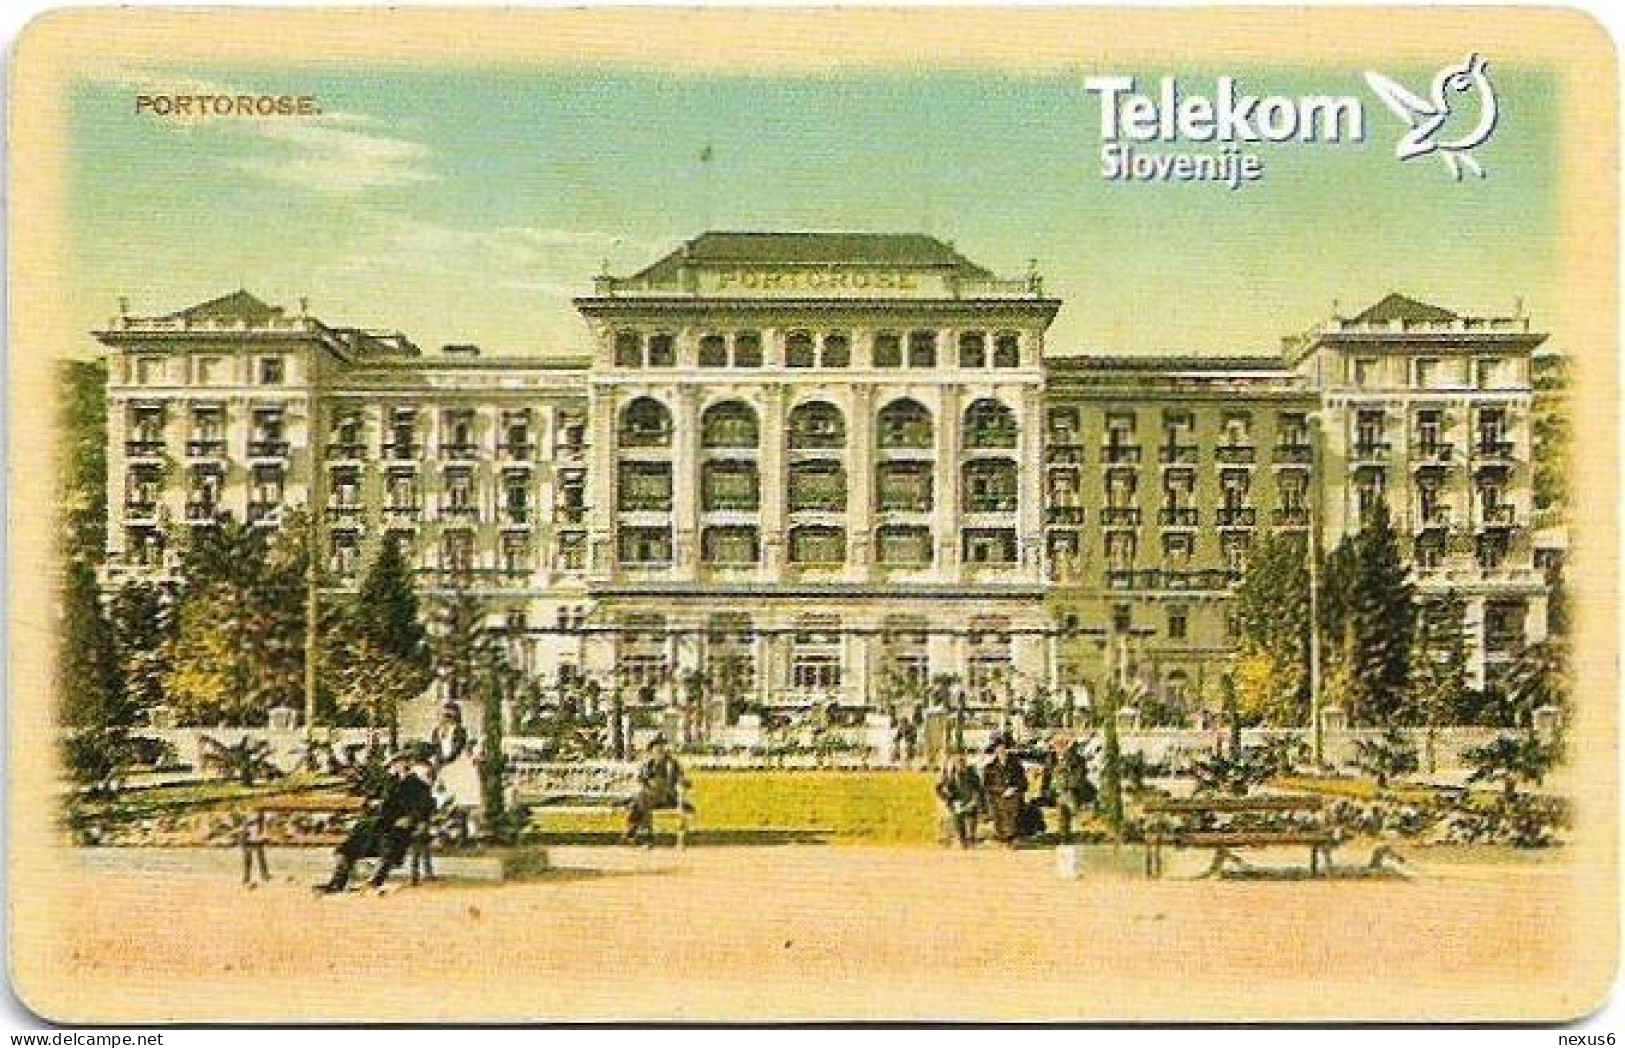 Slovenia - Telekom Slovenije - Slovenian Littoral - Portorož Hotel Palace, Gem5 Red, 03.2002, 50Units, 14.950ex, Used - Slowenien